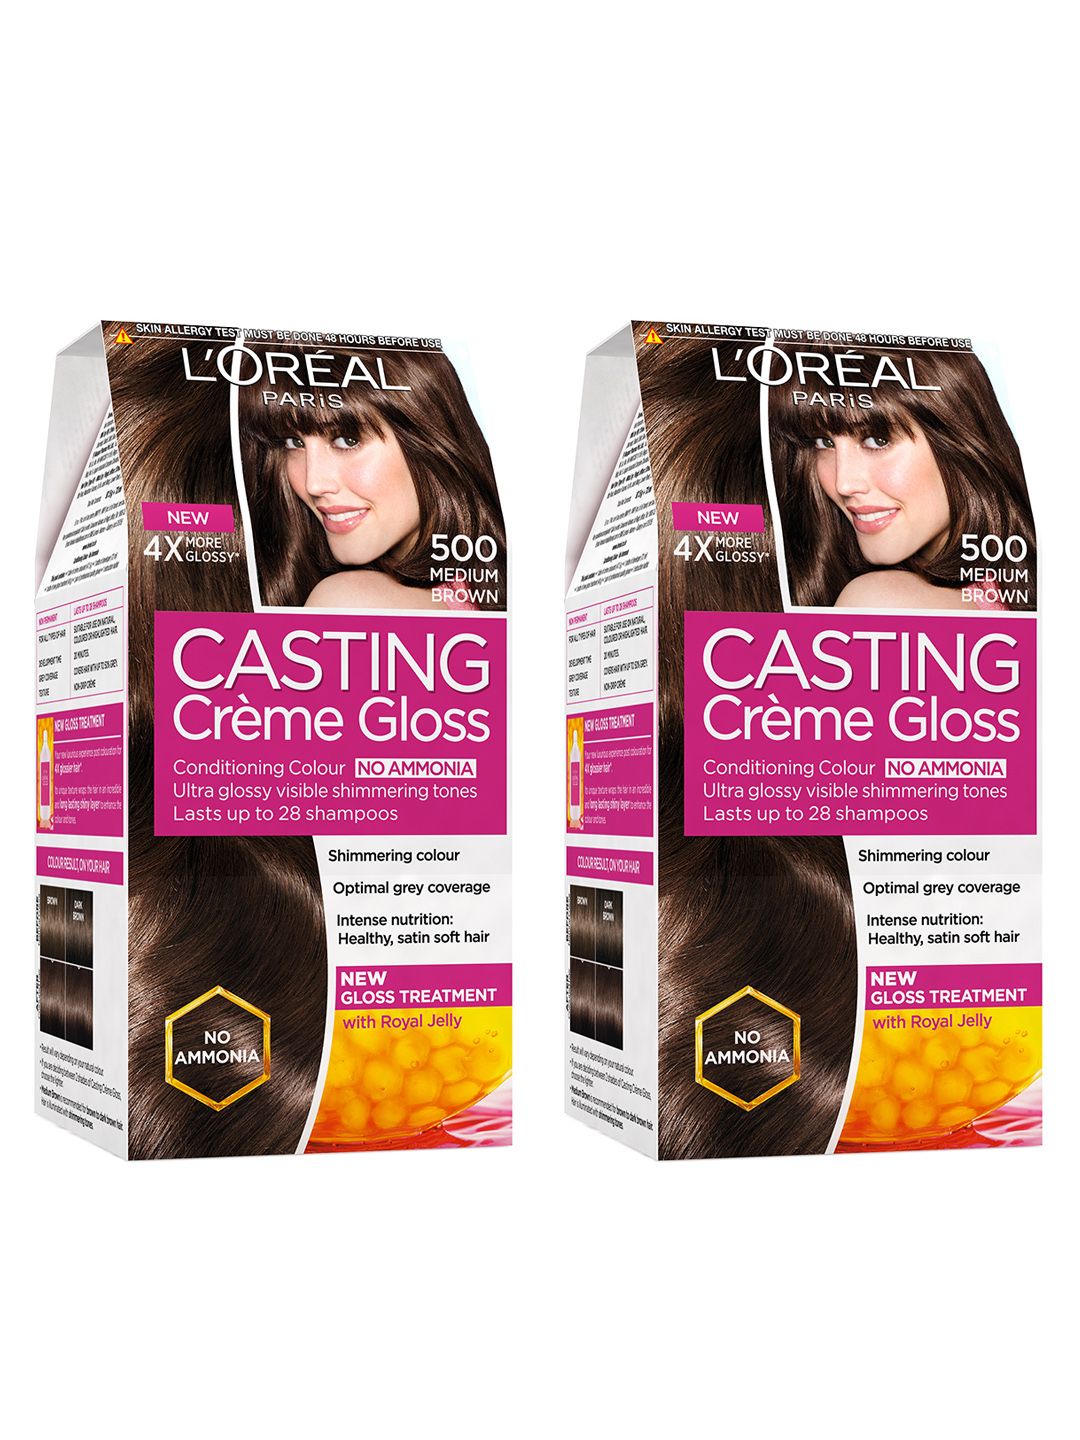 LOreal Paris Women Set Of 2 Casting Creme Gloss Hair Colour - Medium Brown 500 Price in India